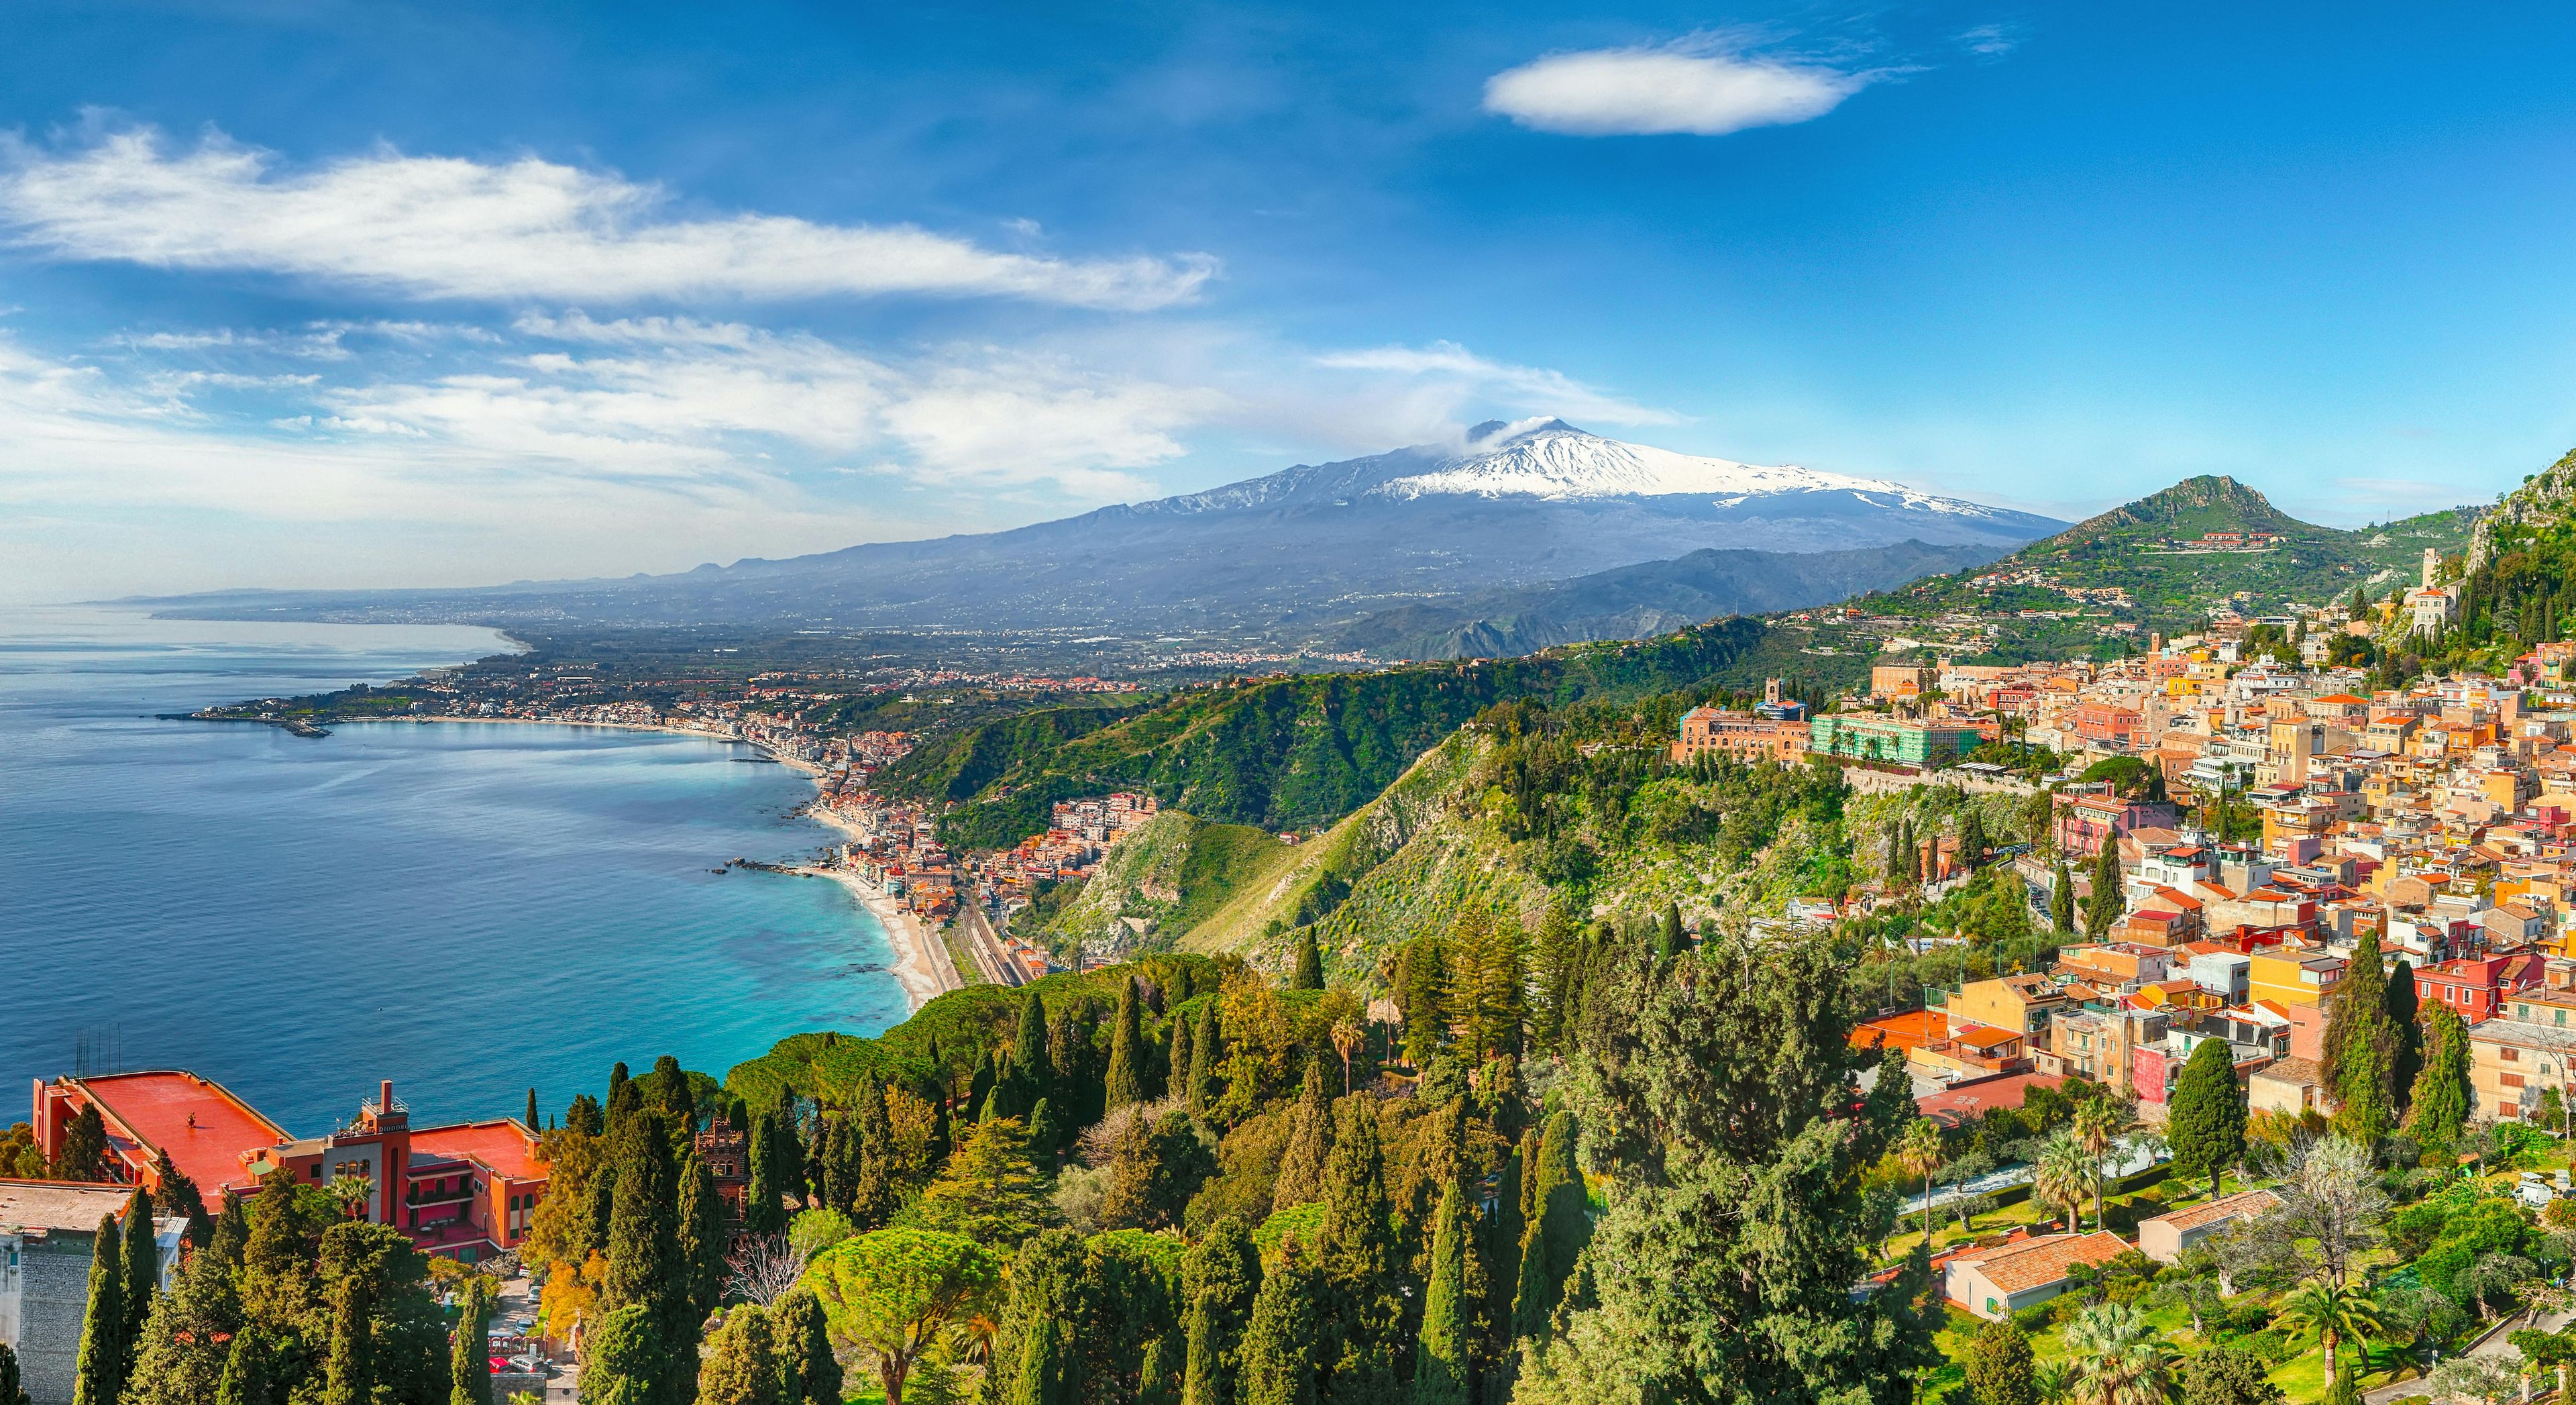 Imagen del tour: Visita al parque del Etna y a Taormina